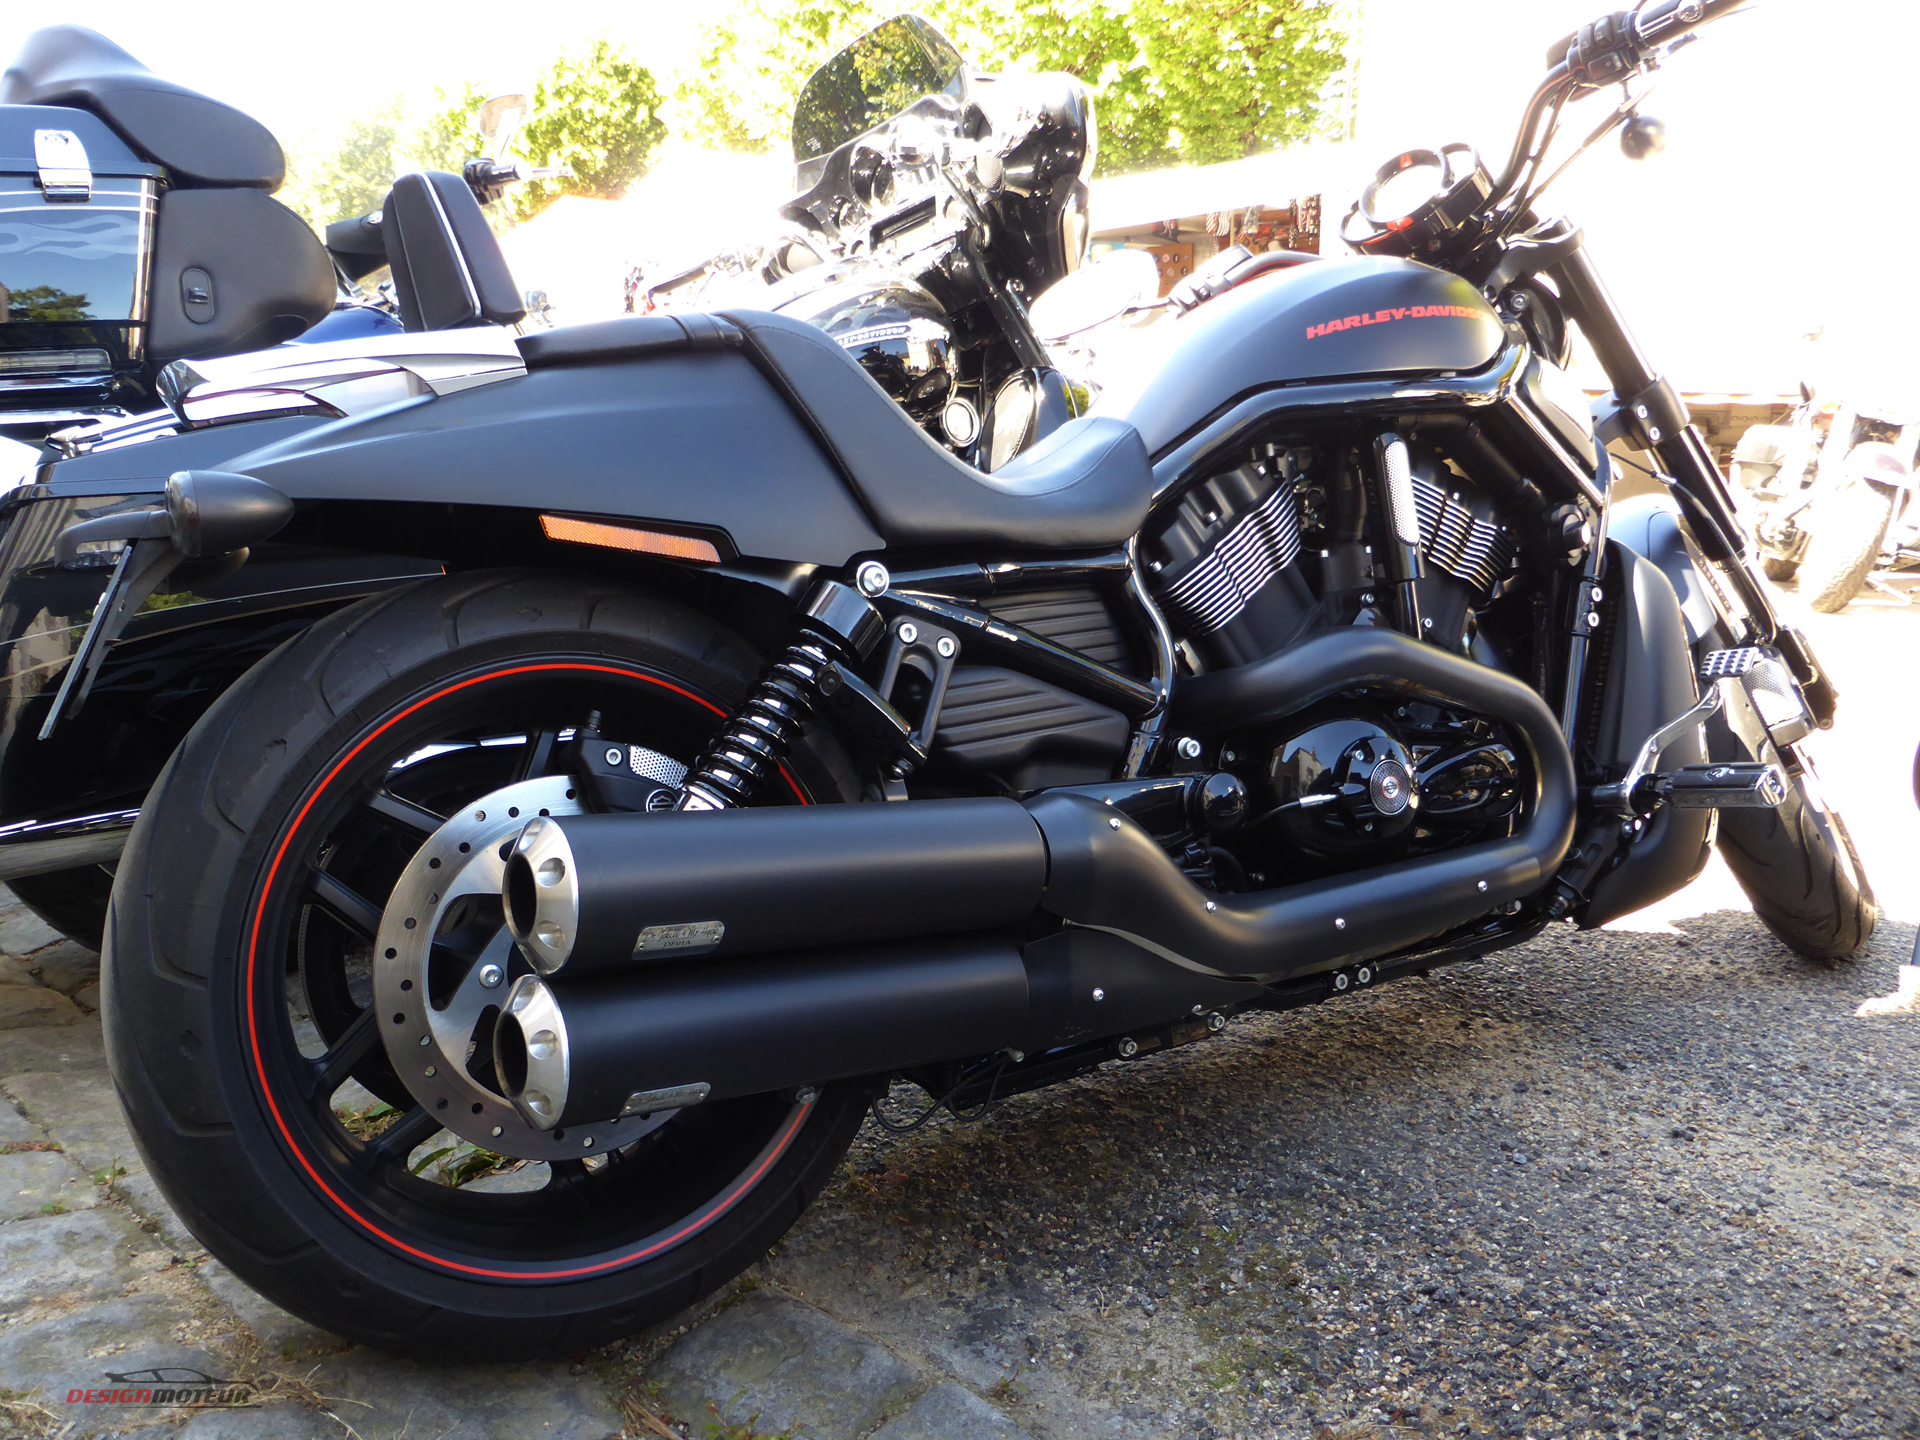 Harley Davidson - US Cars and Bikes - 2015 - photo DESIGNMOTEUR